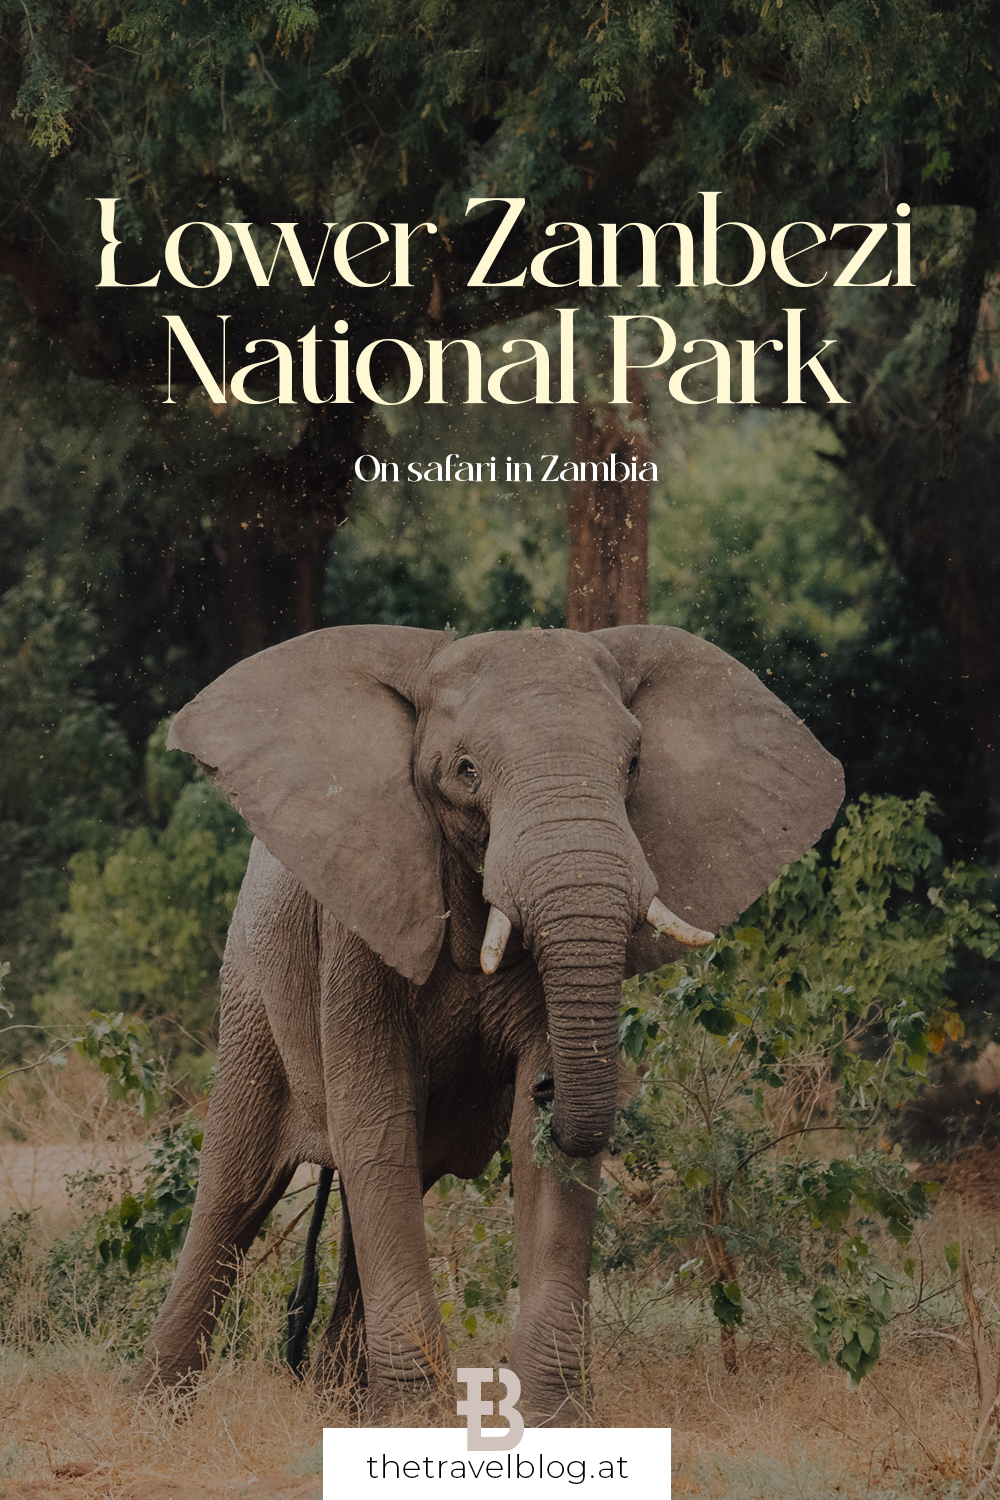 Travel Guide for a safari in Lower Zambezi National Park in Zambia